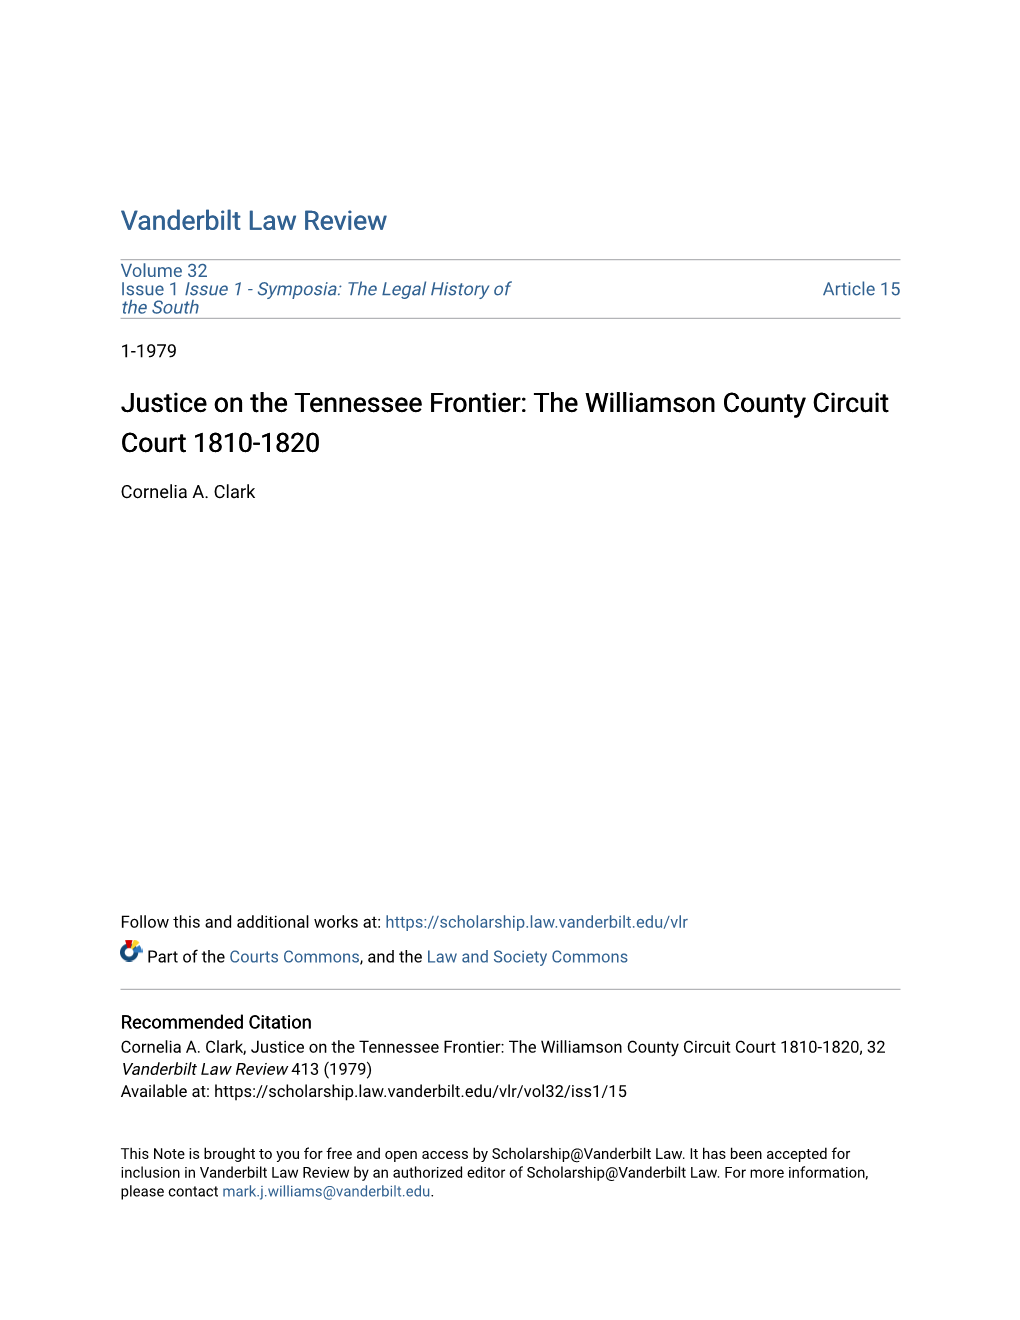 The Williamson County Circuit Court 1810-1820